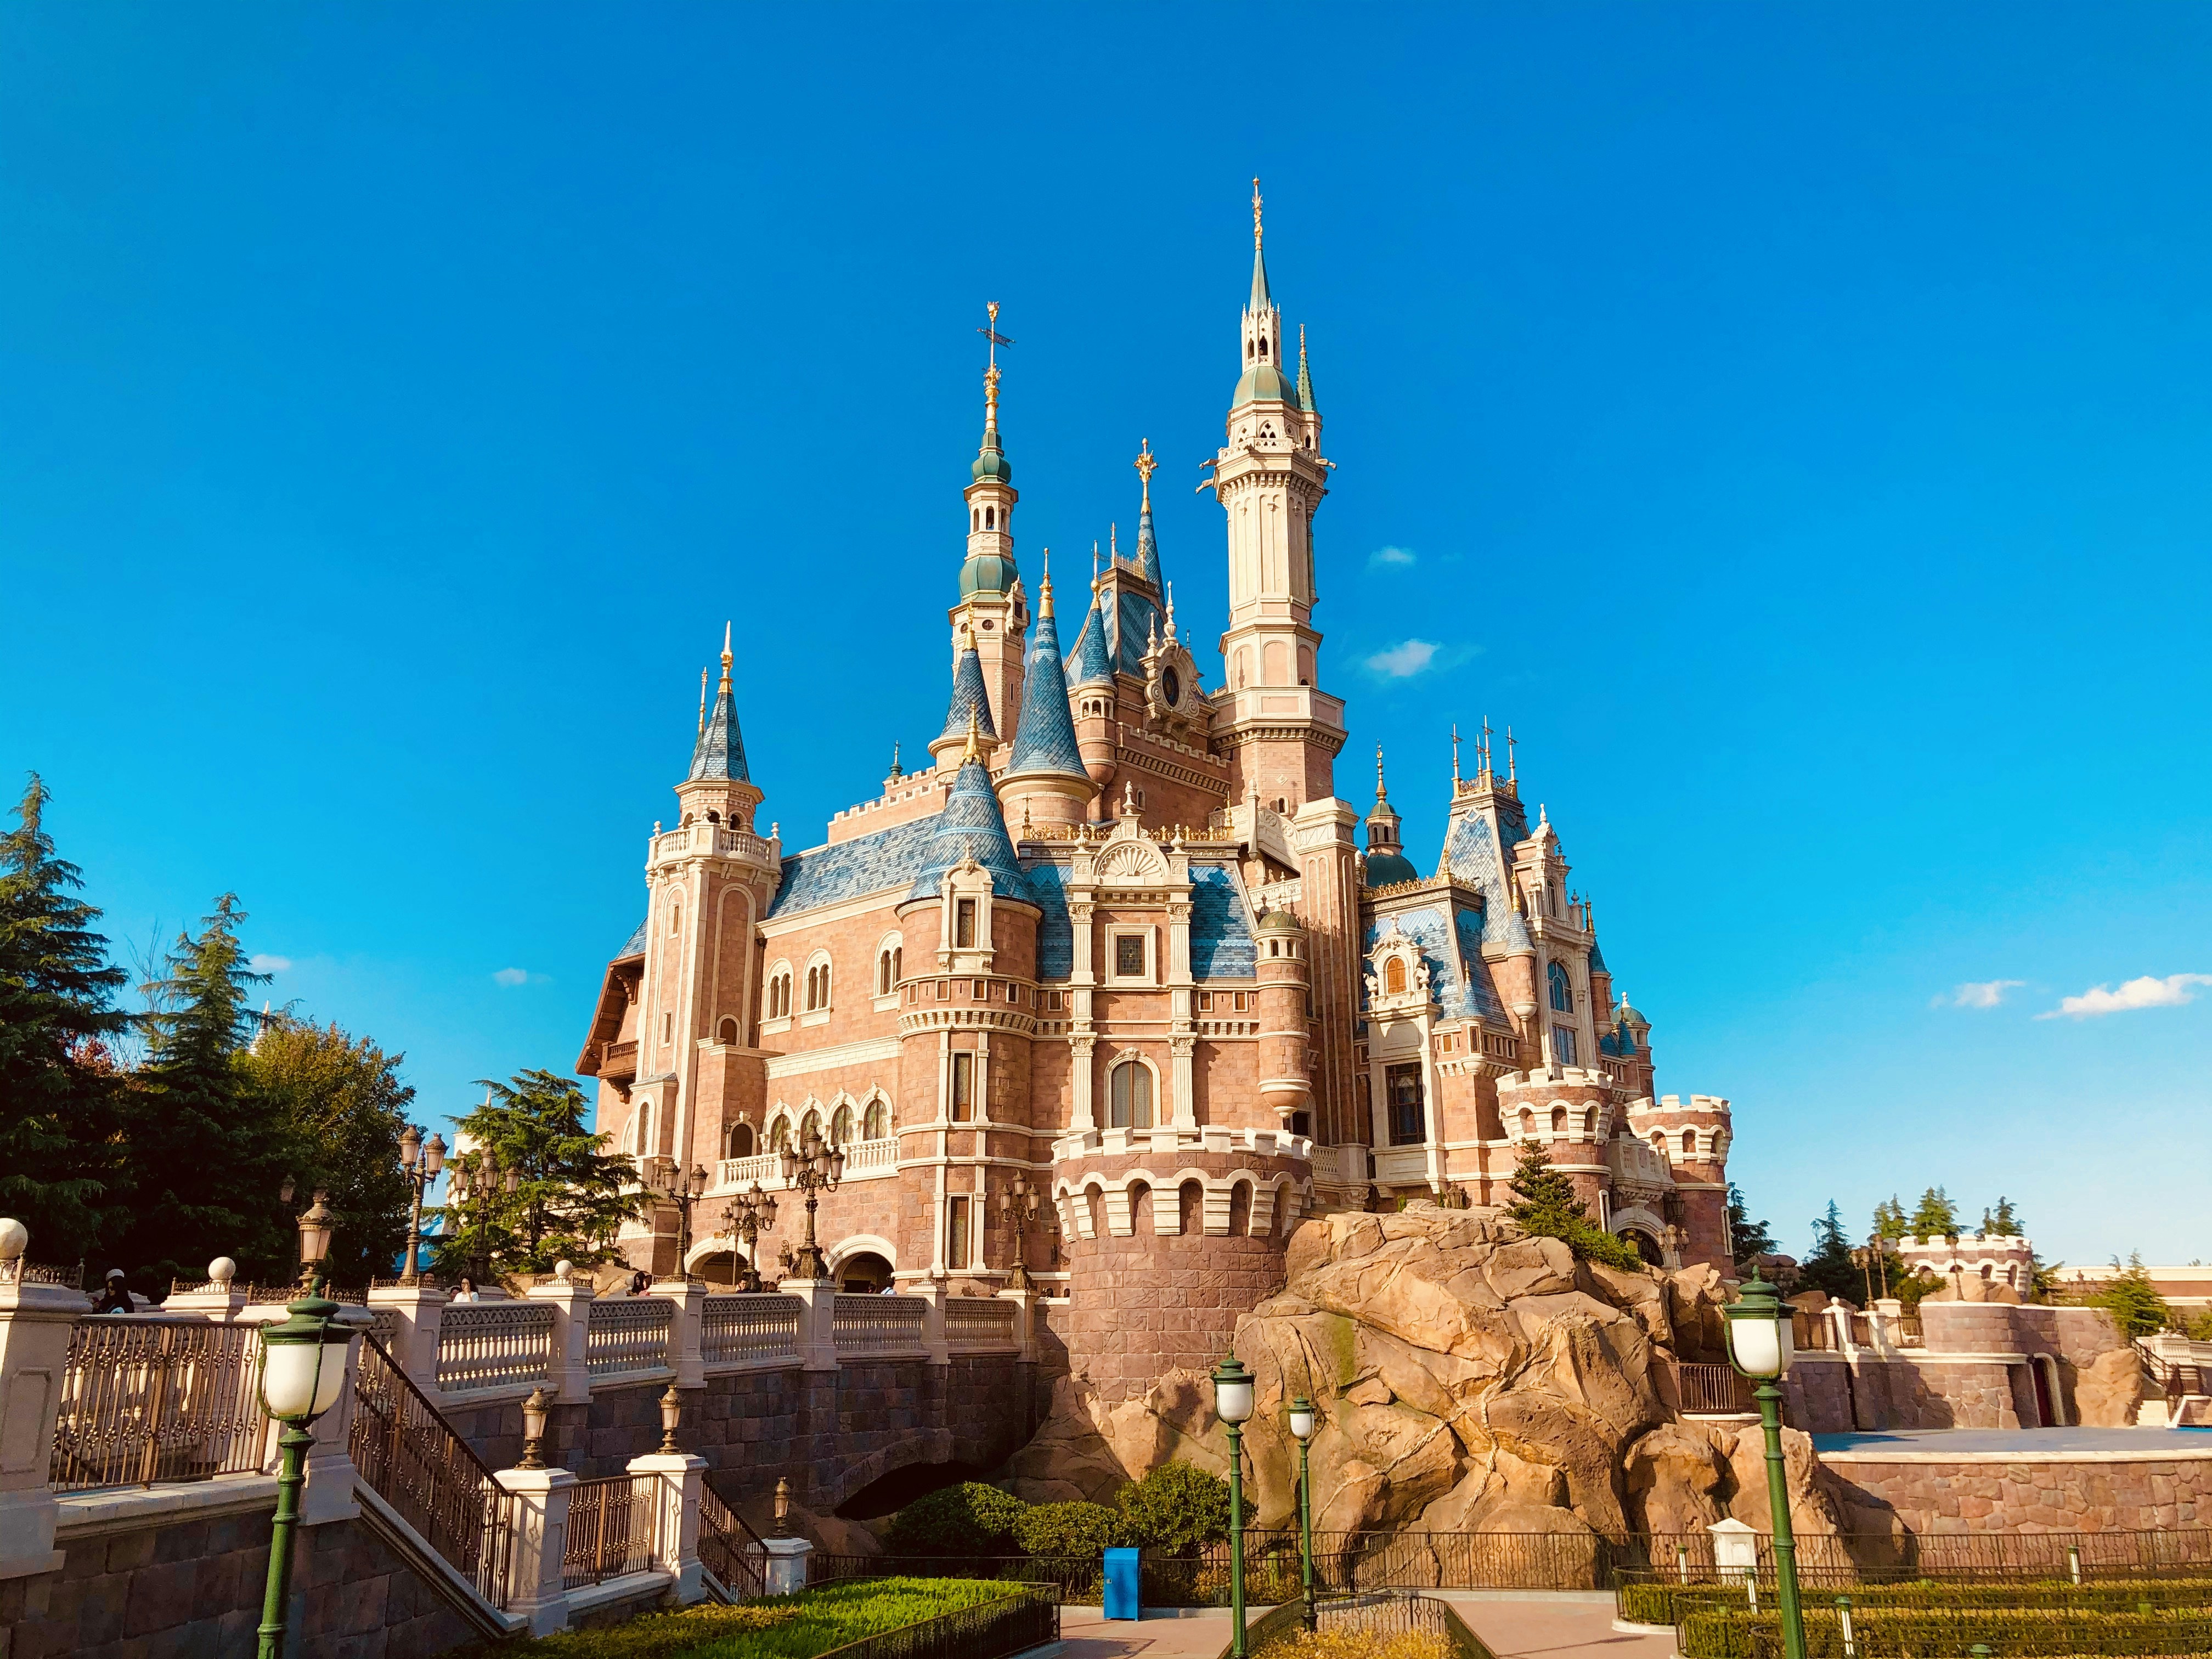 Shanghai Disneyland: the castle.